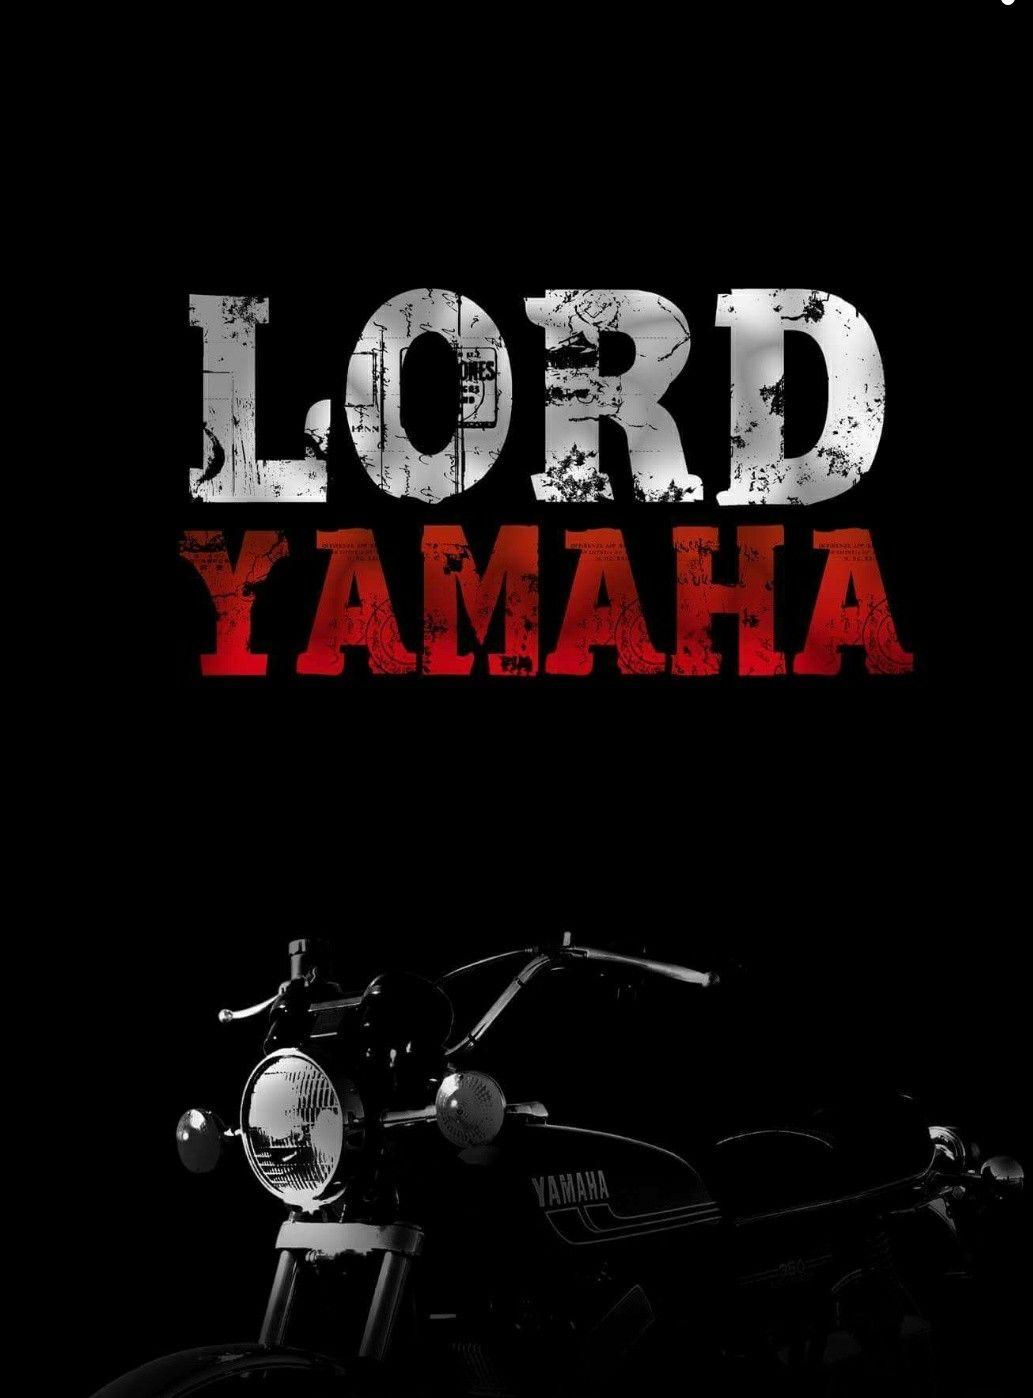 Yamaha. Yamaha bikes, Yamaha motorcycles, Yamaha cafe racer